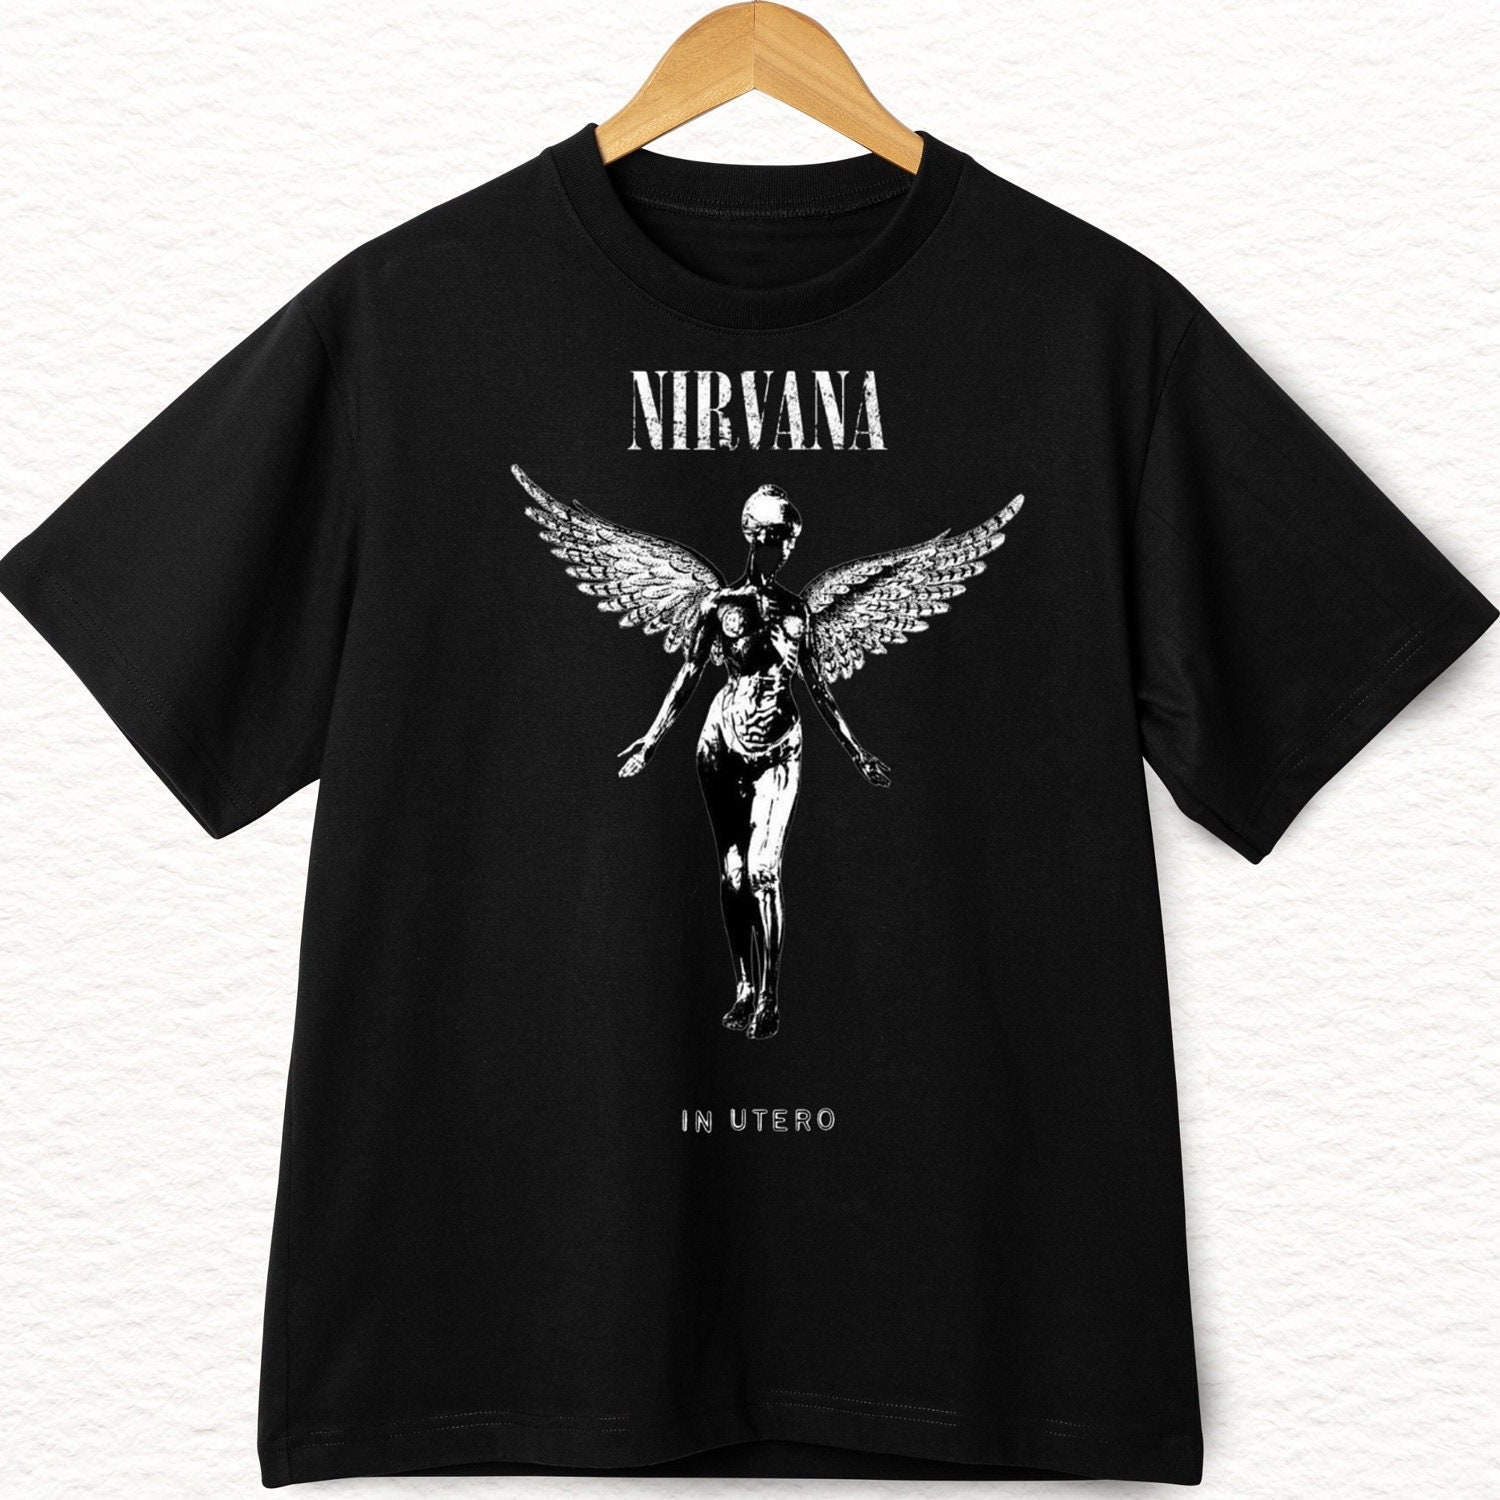 Nirvana "In Utero" Shirt, Rock Band Shirts